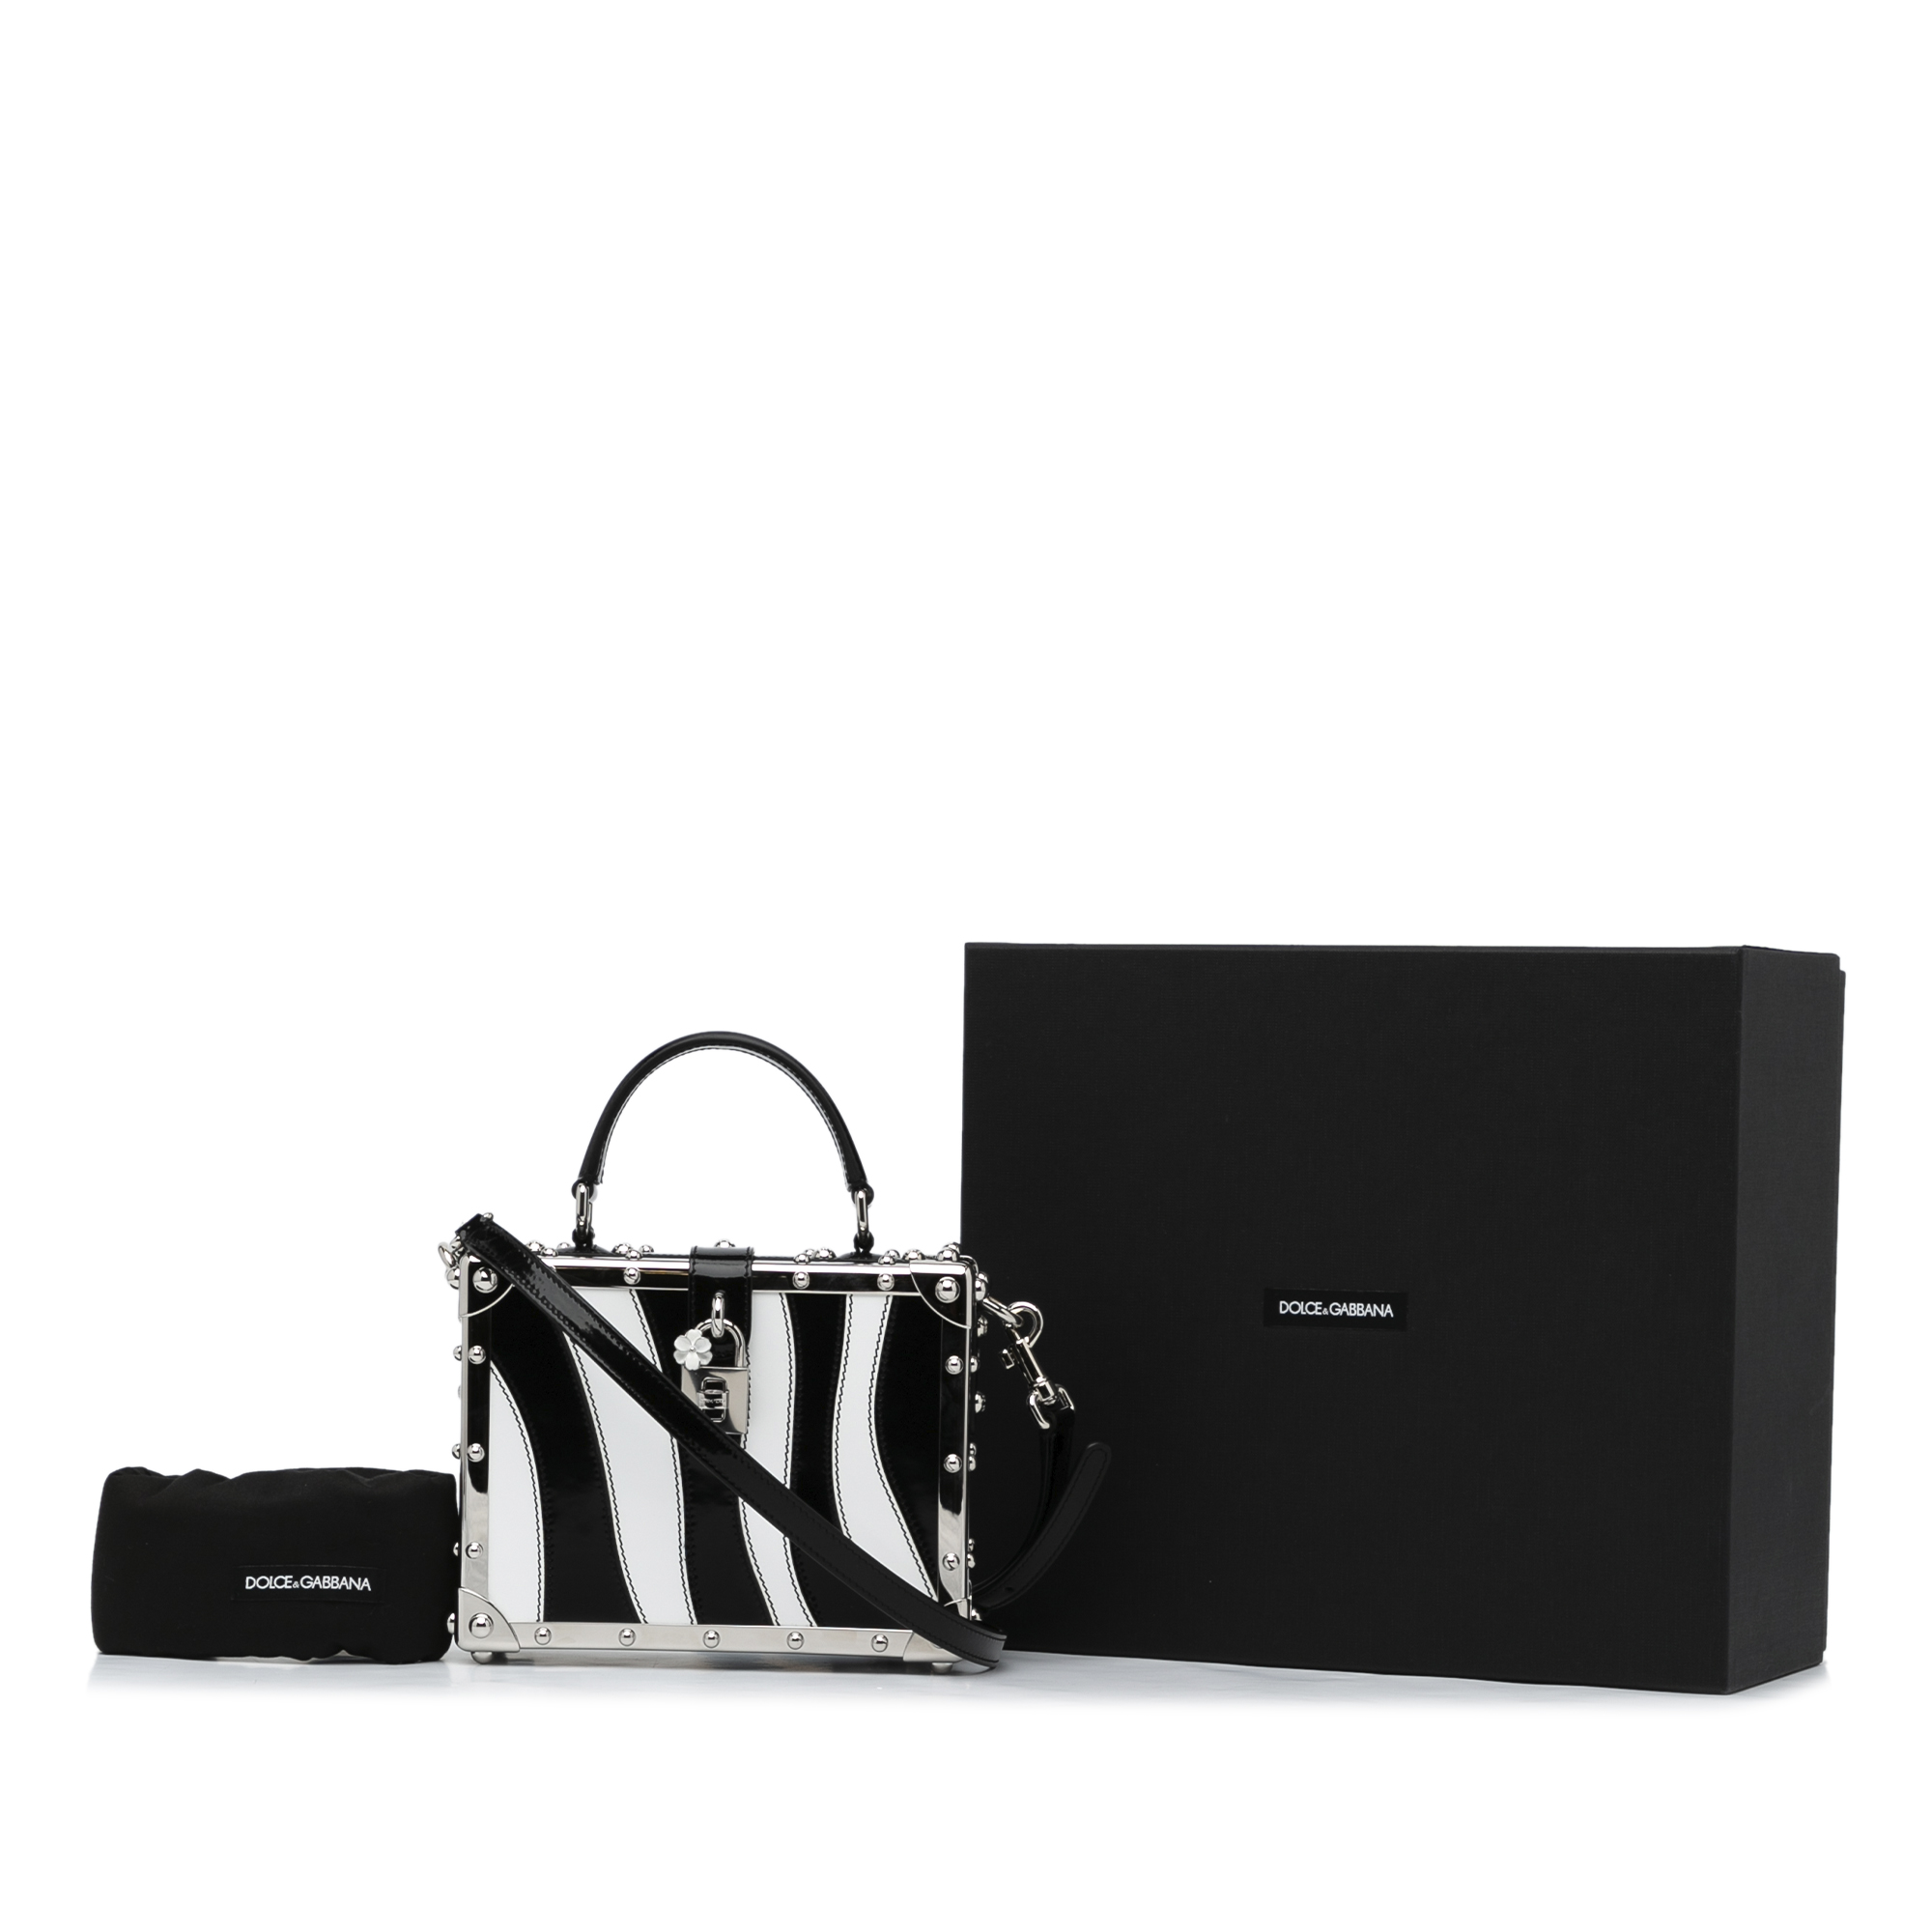 Dolce & Gabbana Black/White Dolce Box